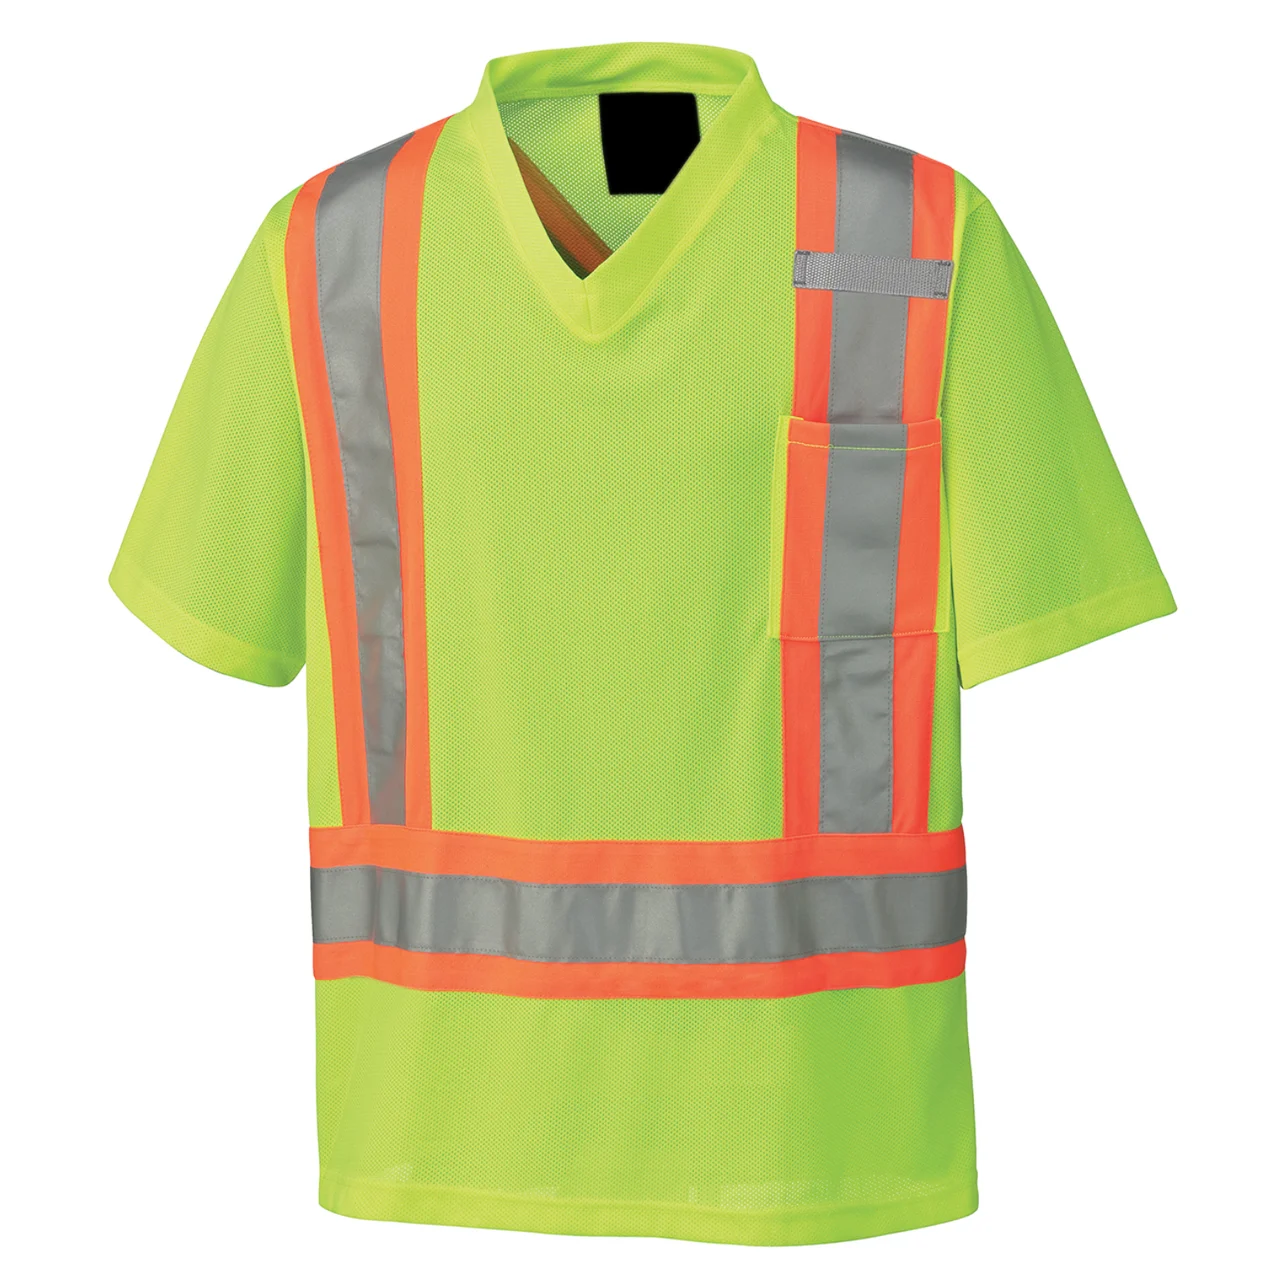 HIGH VISIBILITY HI VIZ SWEATSHIRT REFLECTIVE SAFETY WORK WEAR LONG SLEEVE shirt shirts for men